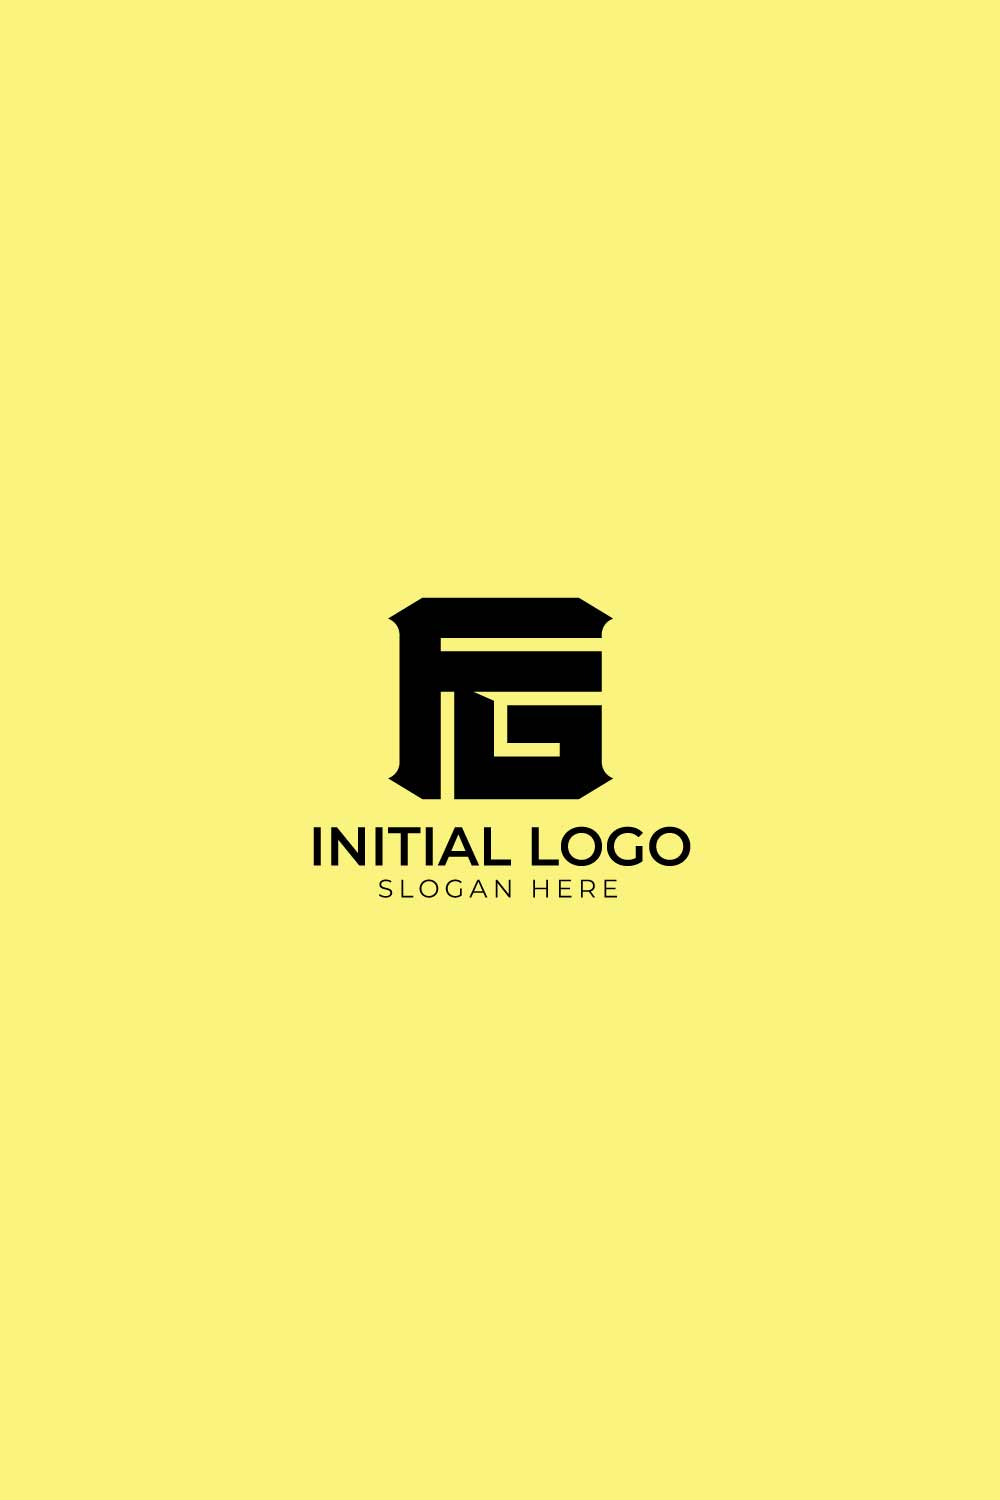 Professional Initial FG logo and GF logo design pinterest preview image.